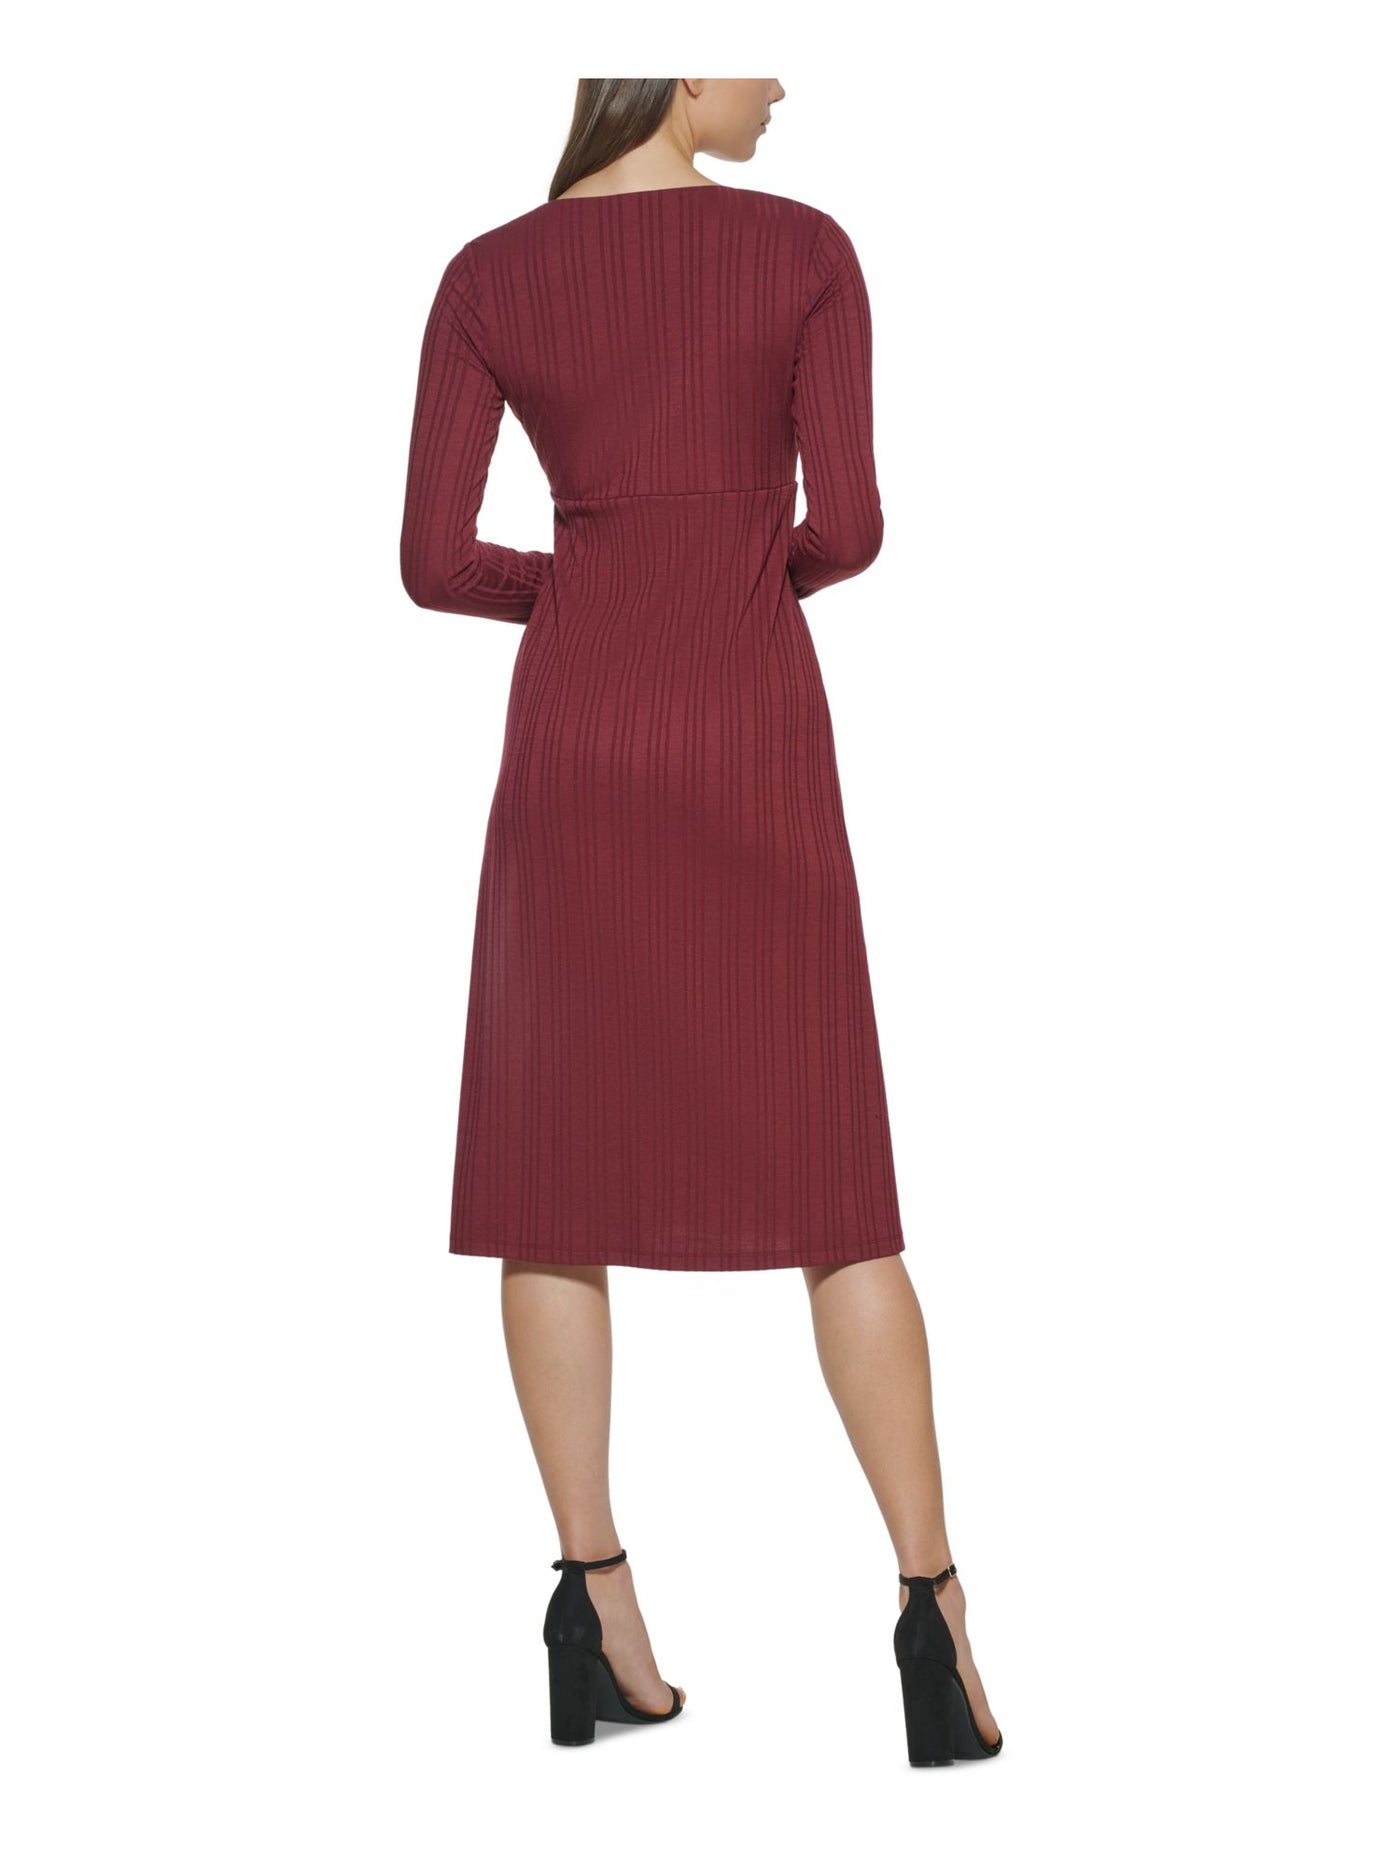 KENSIE DRESSES Womens Maroon Knit Ribbed Lined Pullover Long Sleeve Surplice Neckline Midi Wear To Work Dress XS